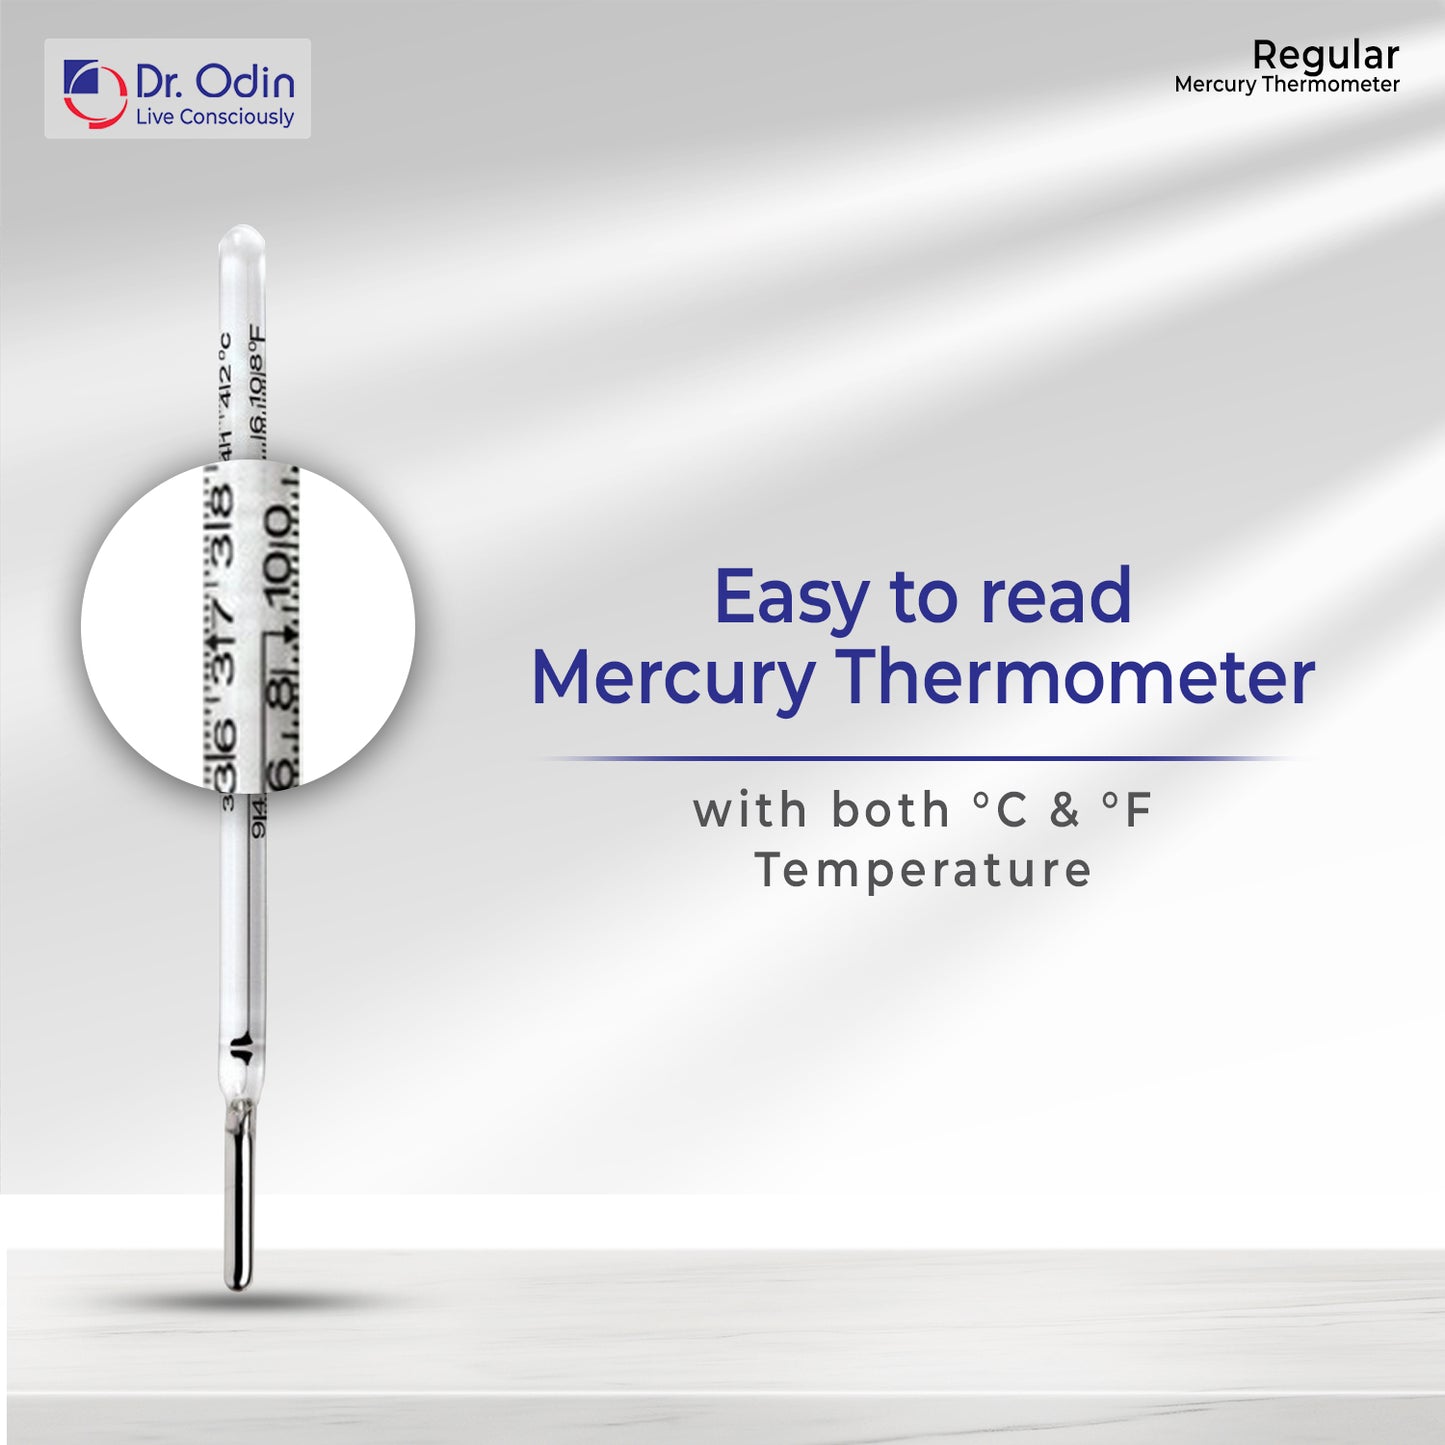 Mercury Thermometer Regular